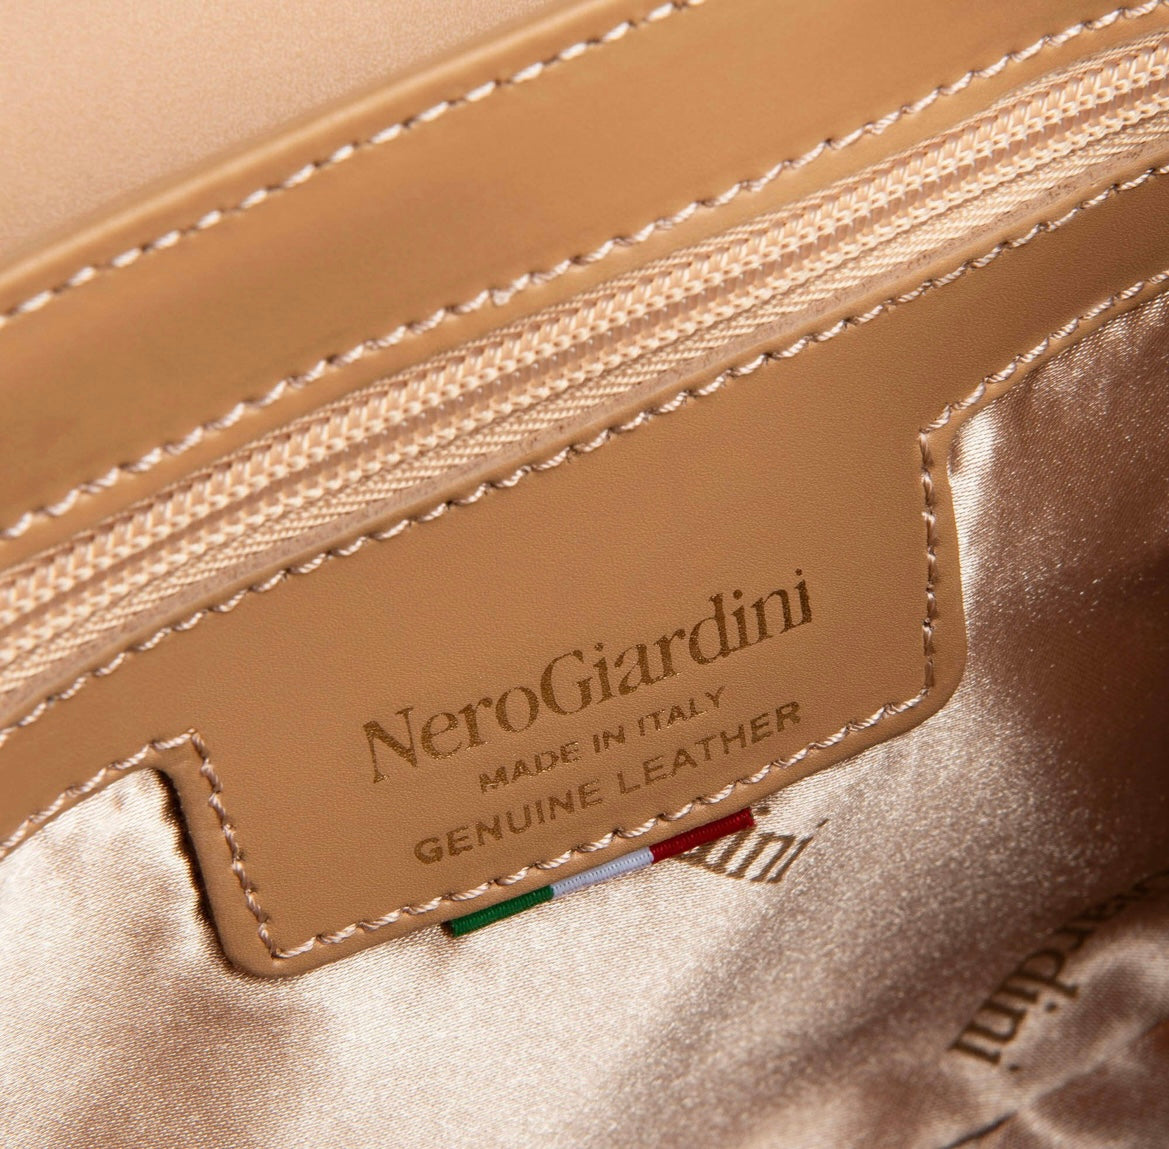 Nerogiardini tan leather shoulder bag